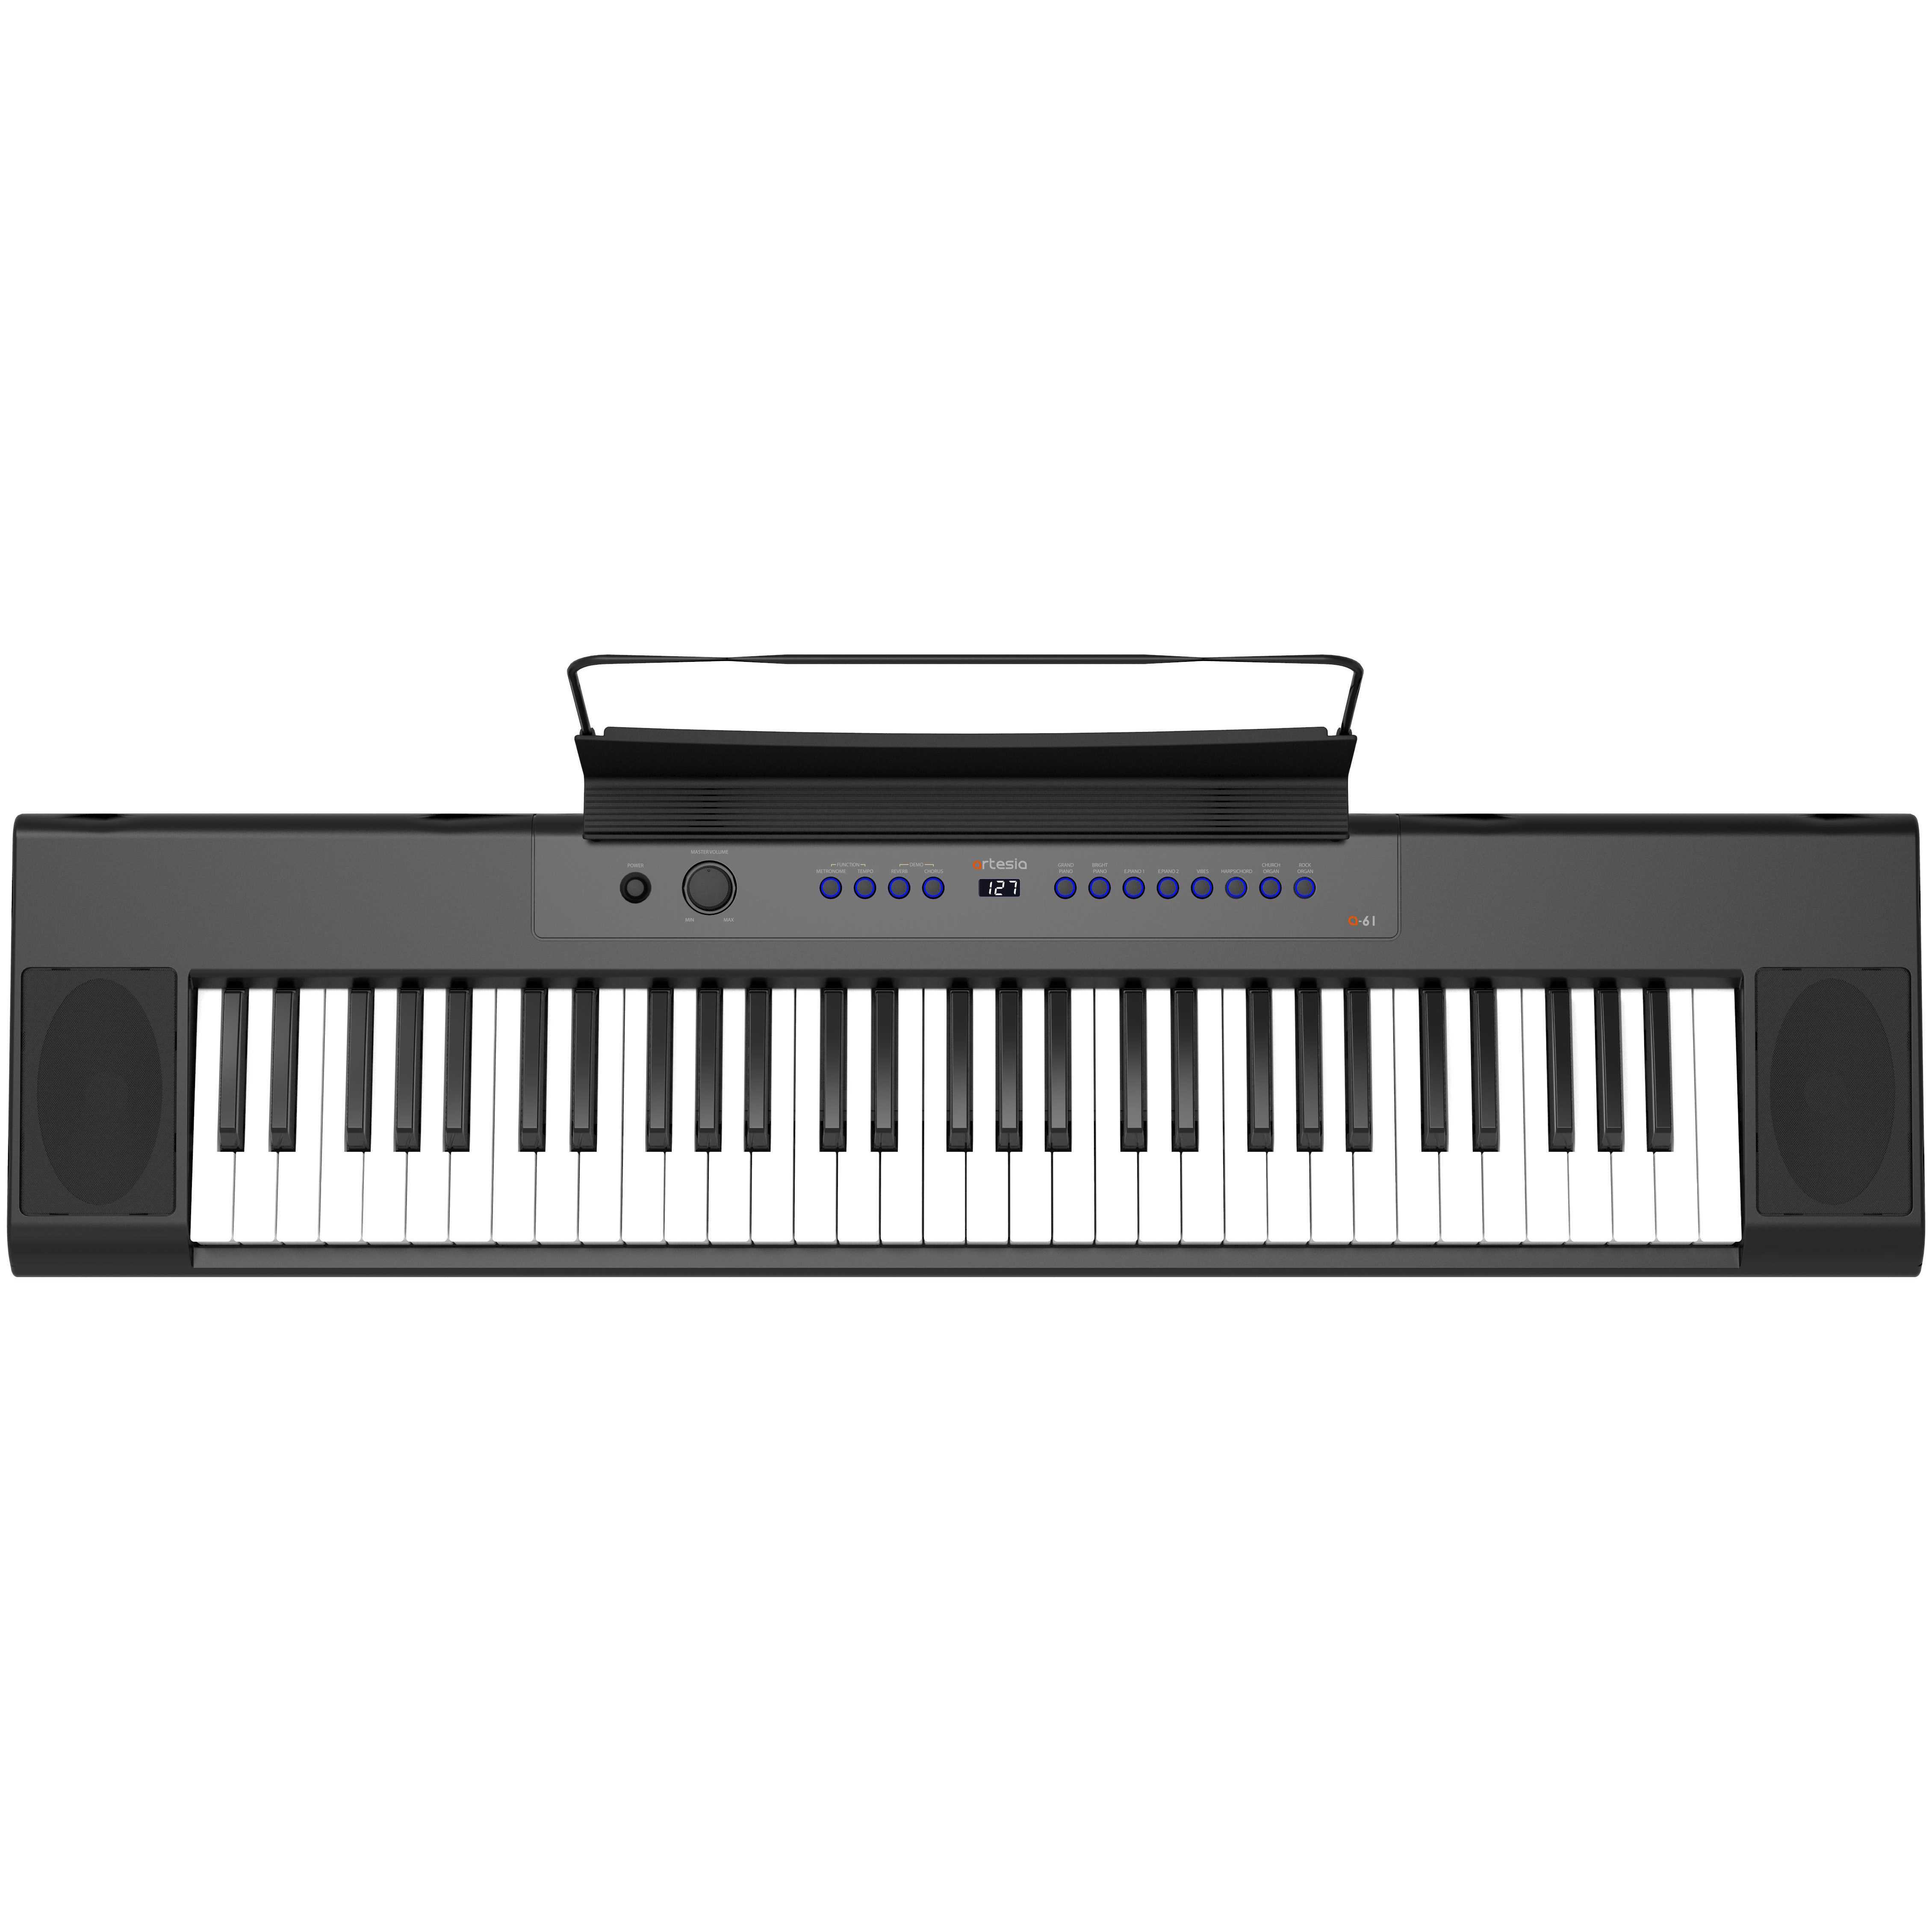 Artesia A-61 Black Цифровые пианино